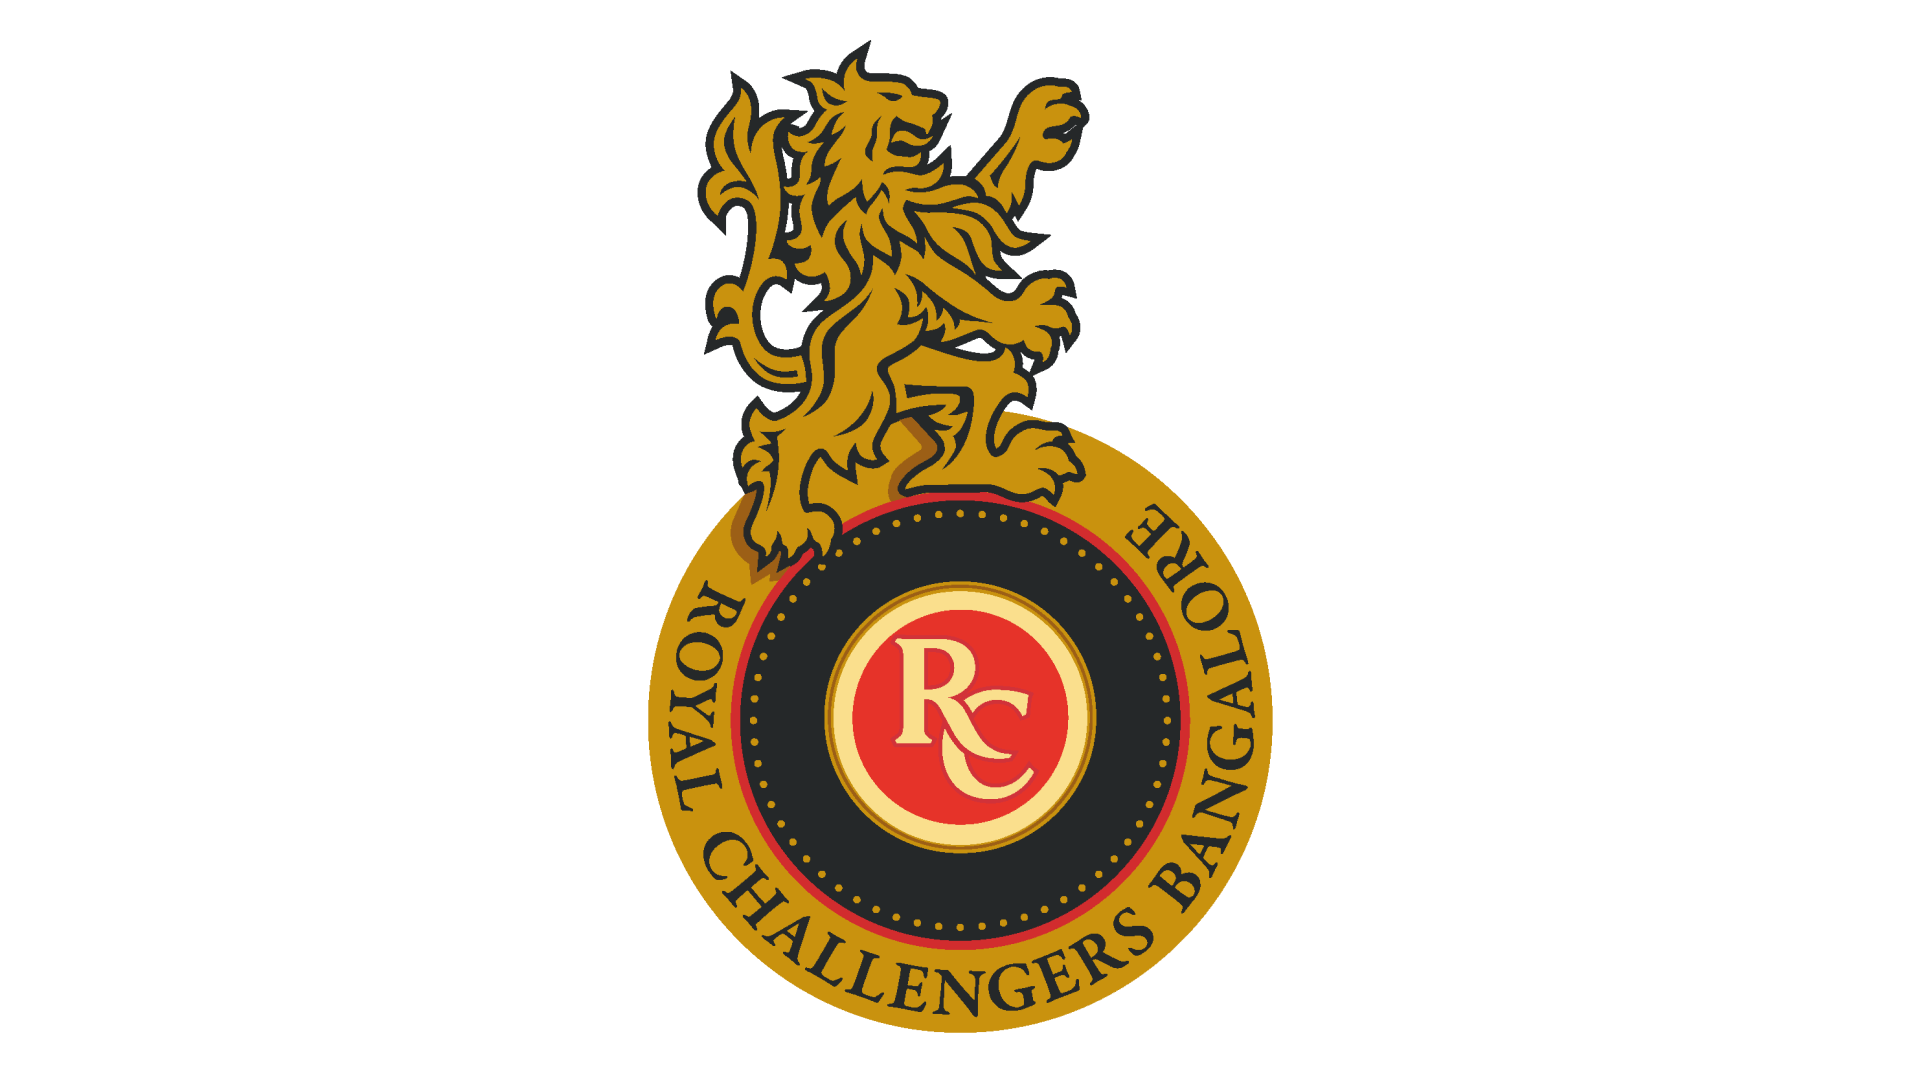 RCB Logo - Royal Challengers Bangalore - SVG, PNG, AI, EPS Vectors SVG,  PNG, AI, EPS Vectors